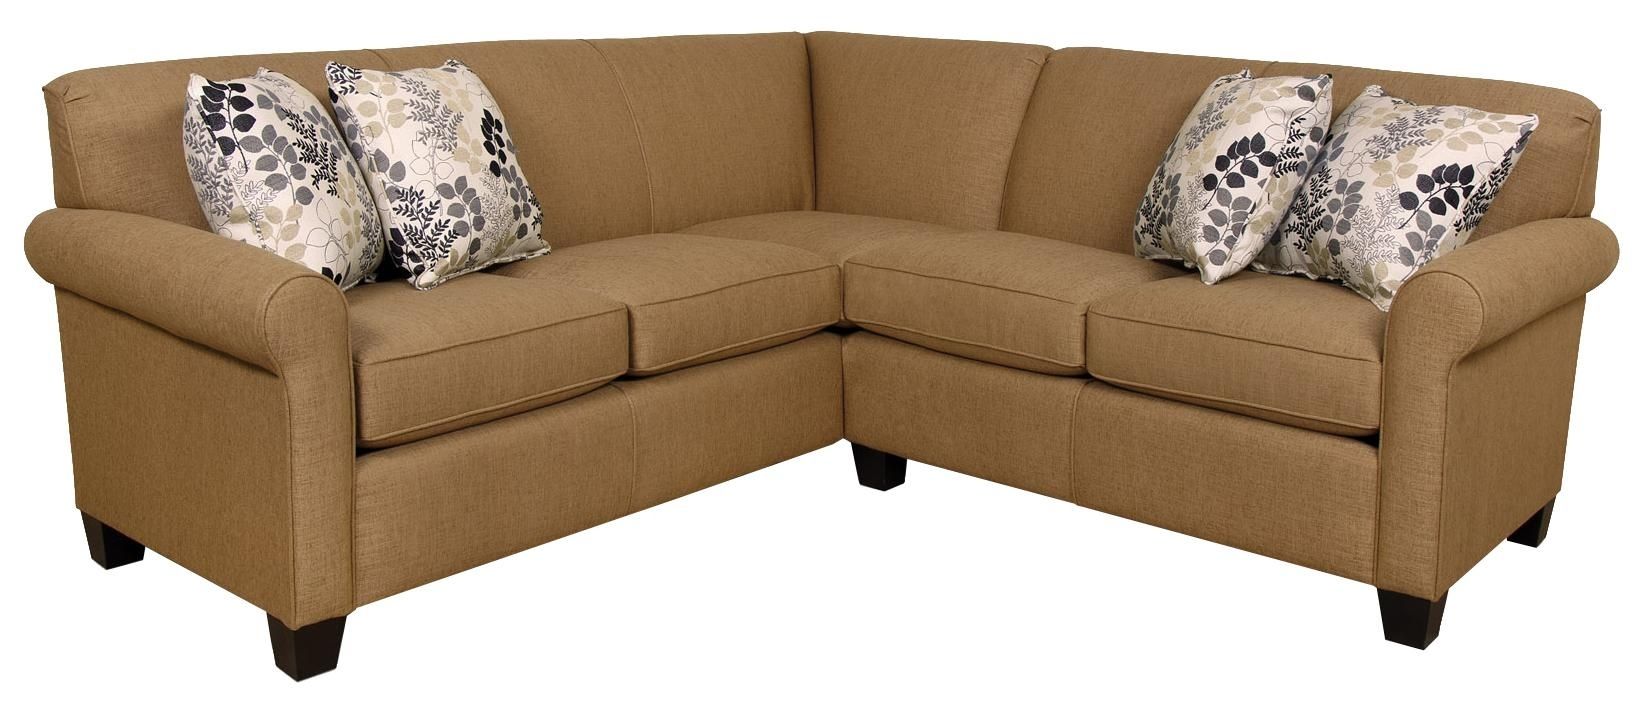 England Angie Small Corner Sectional Sofa – Ahfa – Sofa Sectional With Regard To England Sectional Sofas (View 5 of 10)